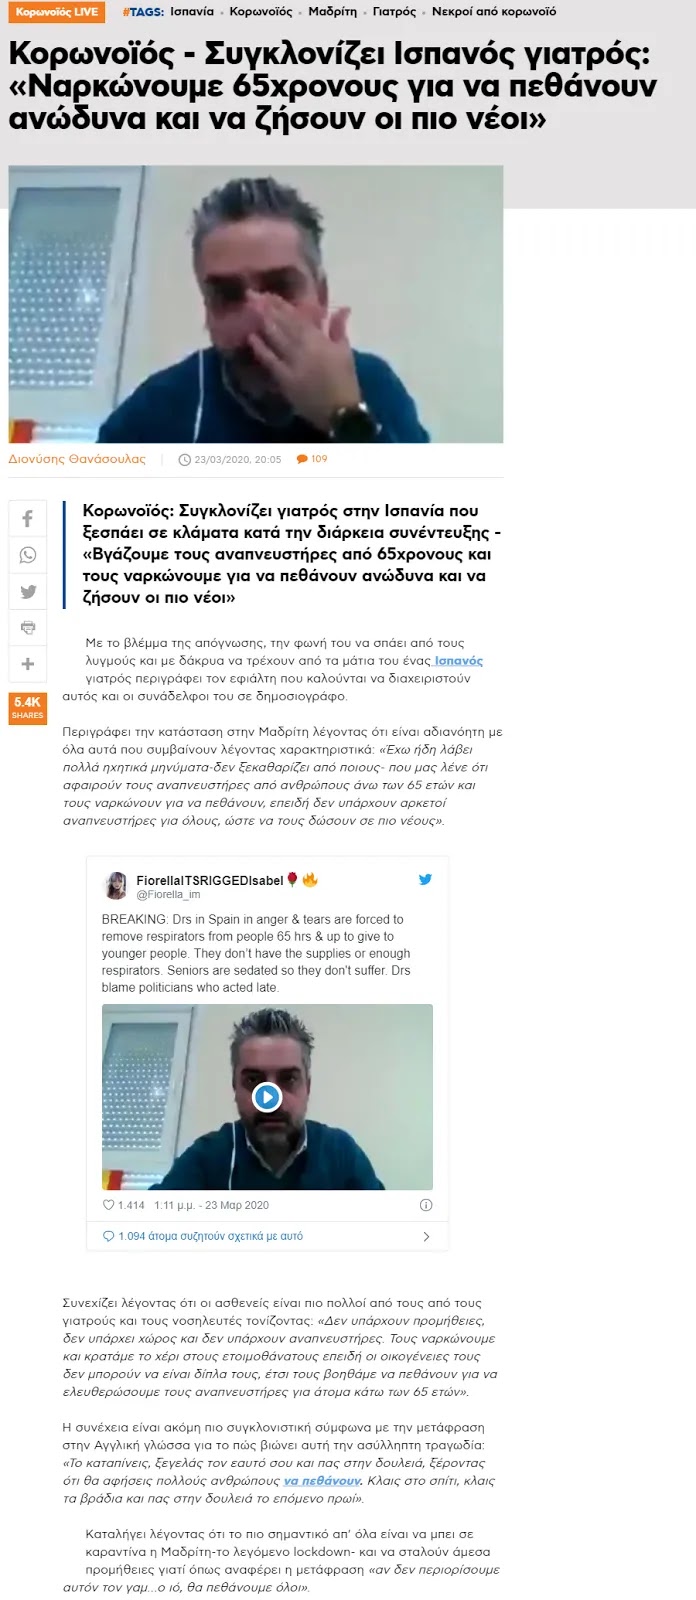 Fake News ο «Ισπανός γιατρός» που «συγκλόνισε» κλαίγοντας μπροστά στην κάμερα - Φωτογραφία 1